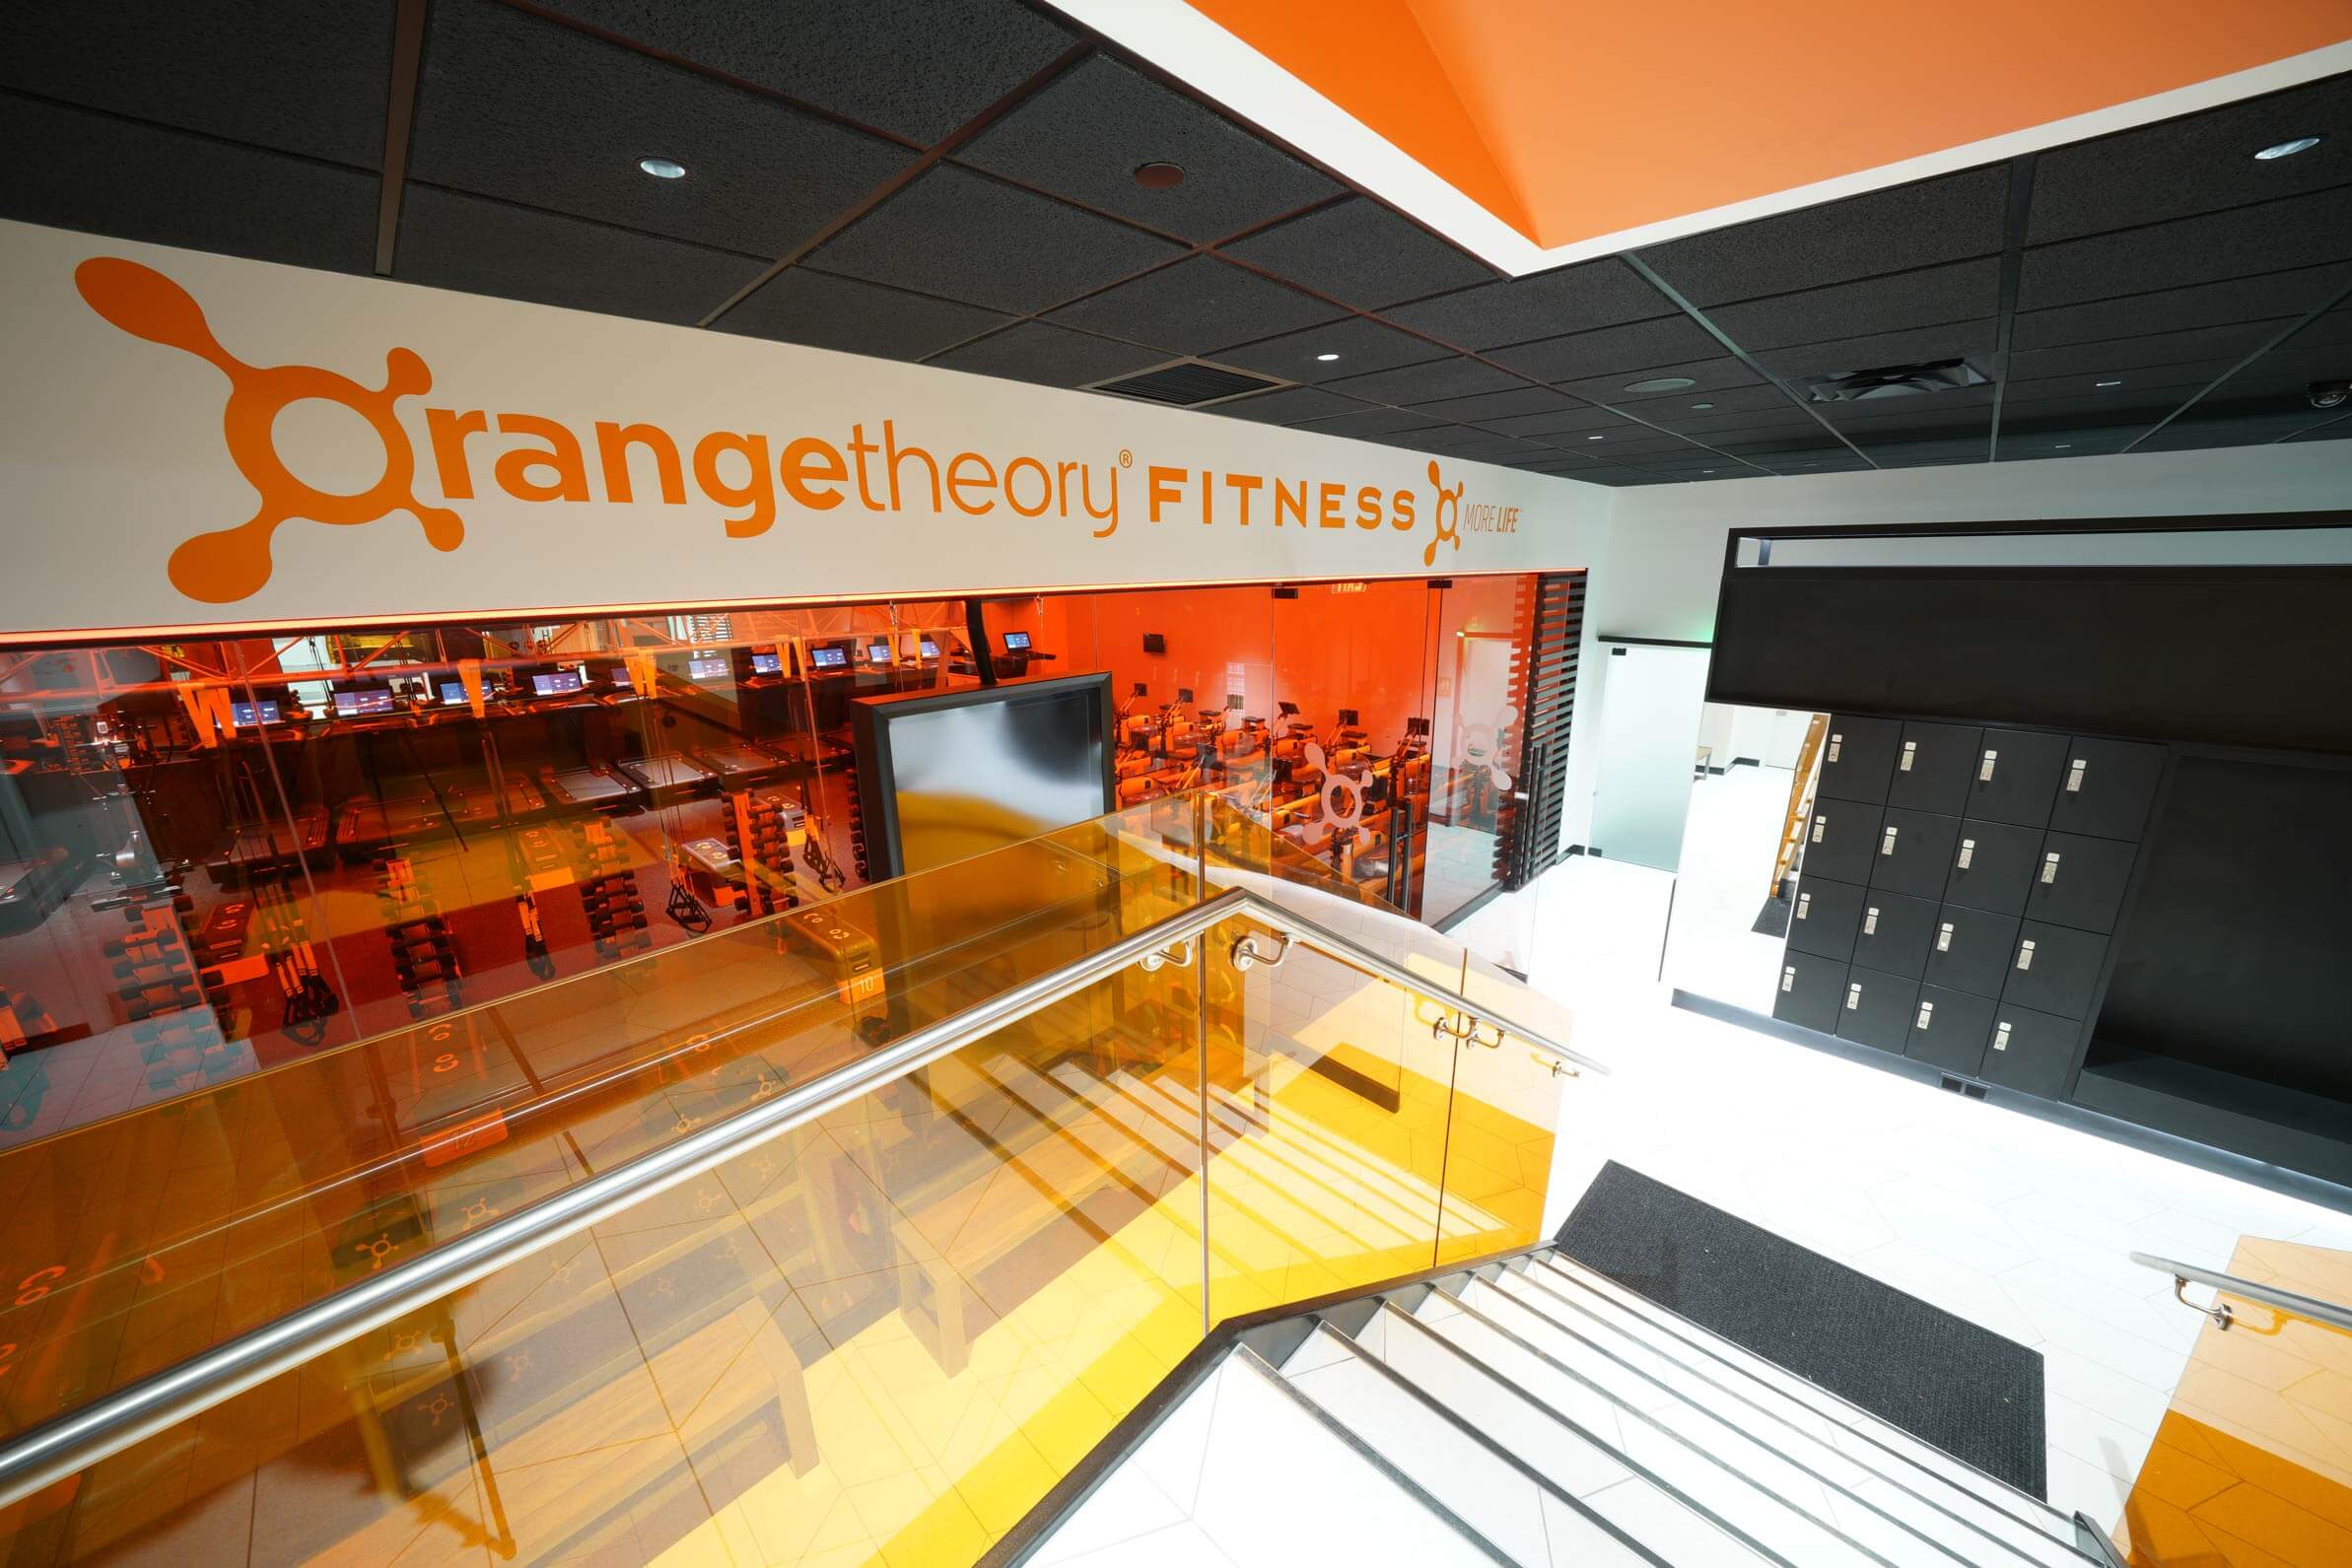 21 Orangetheory Fitness ideas  fitness, orange theory workout